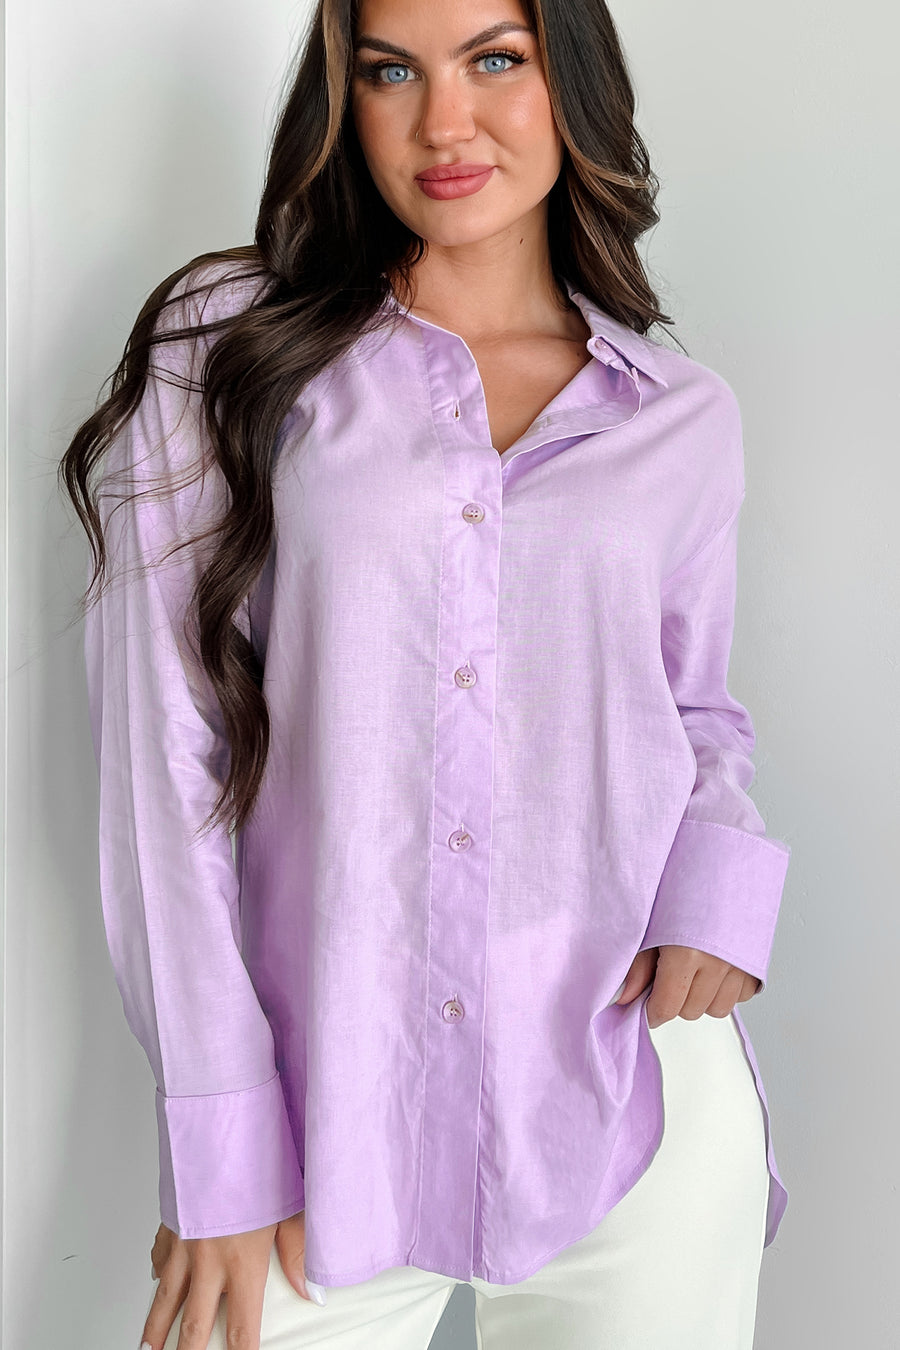 Dressed With Confidence Linen Dress Shirt (Lilac) - NanaMacs